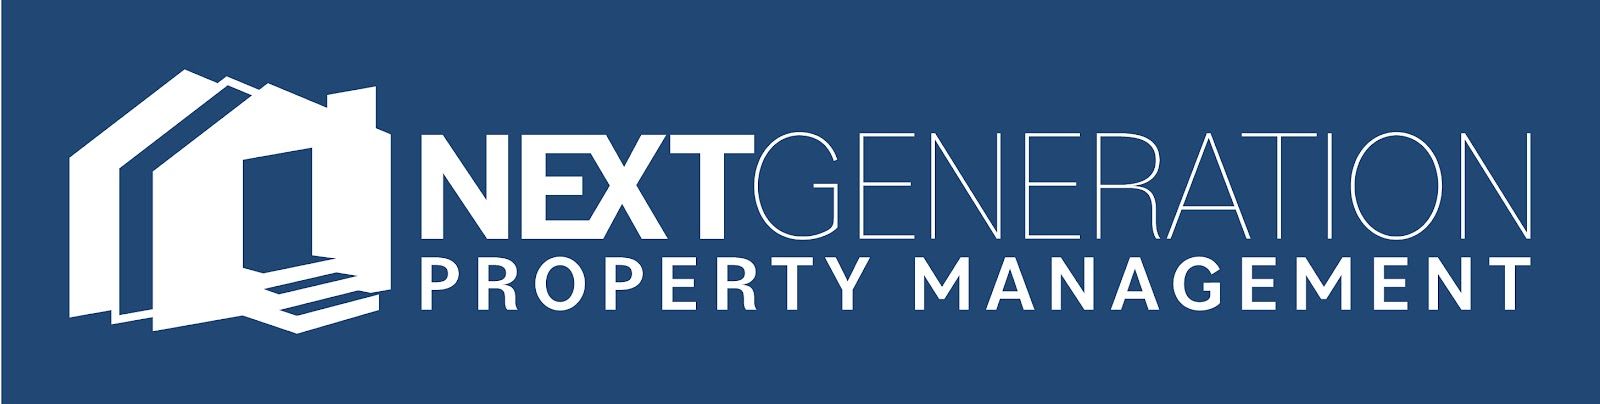 Next Generation Property Management, LLC homepage